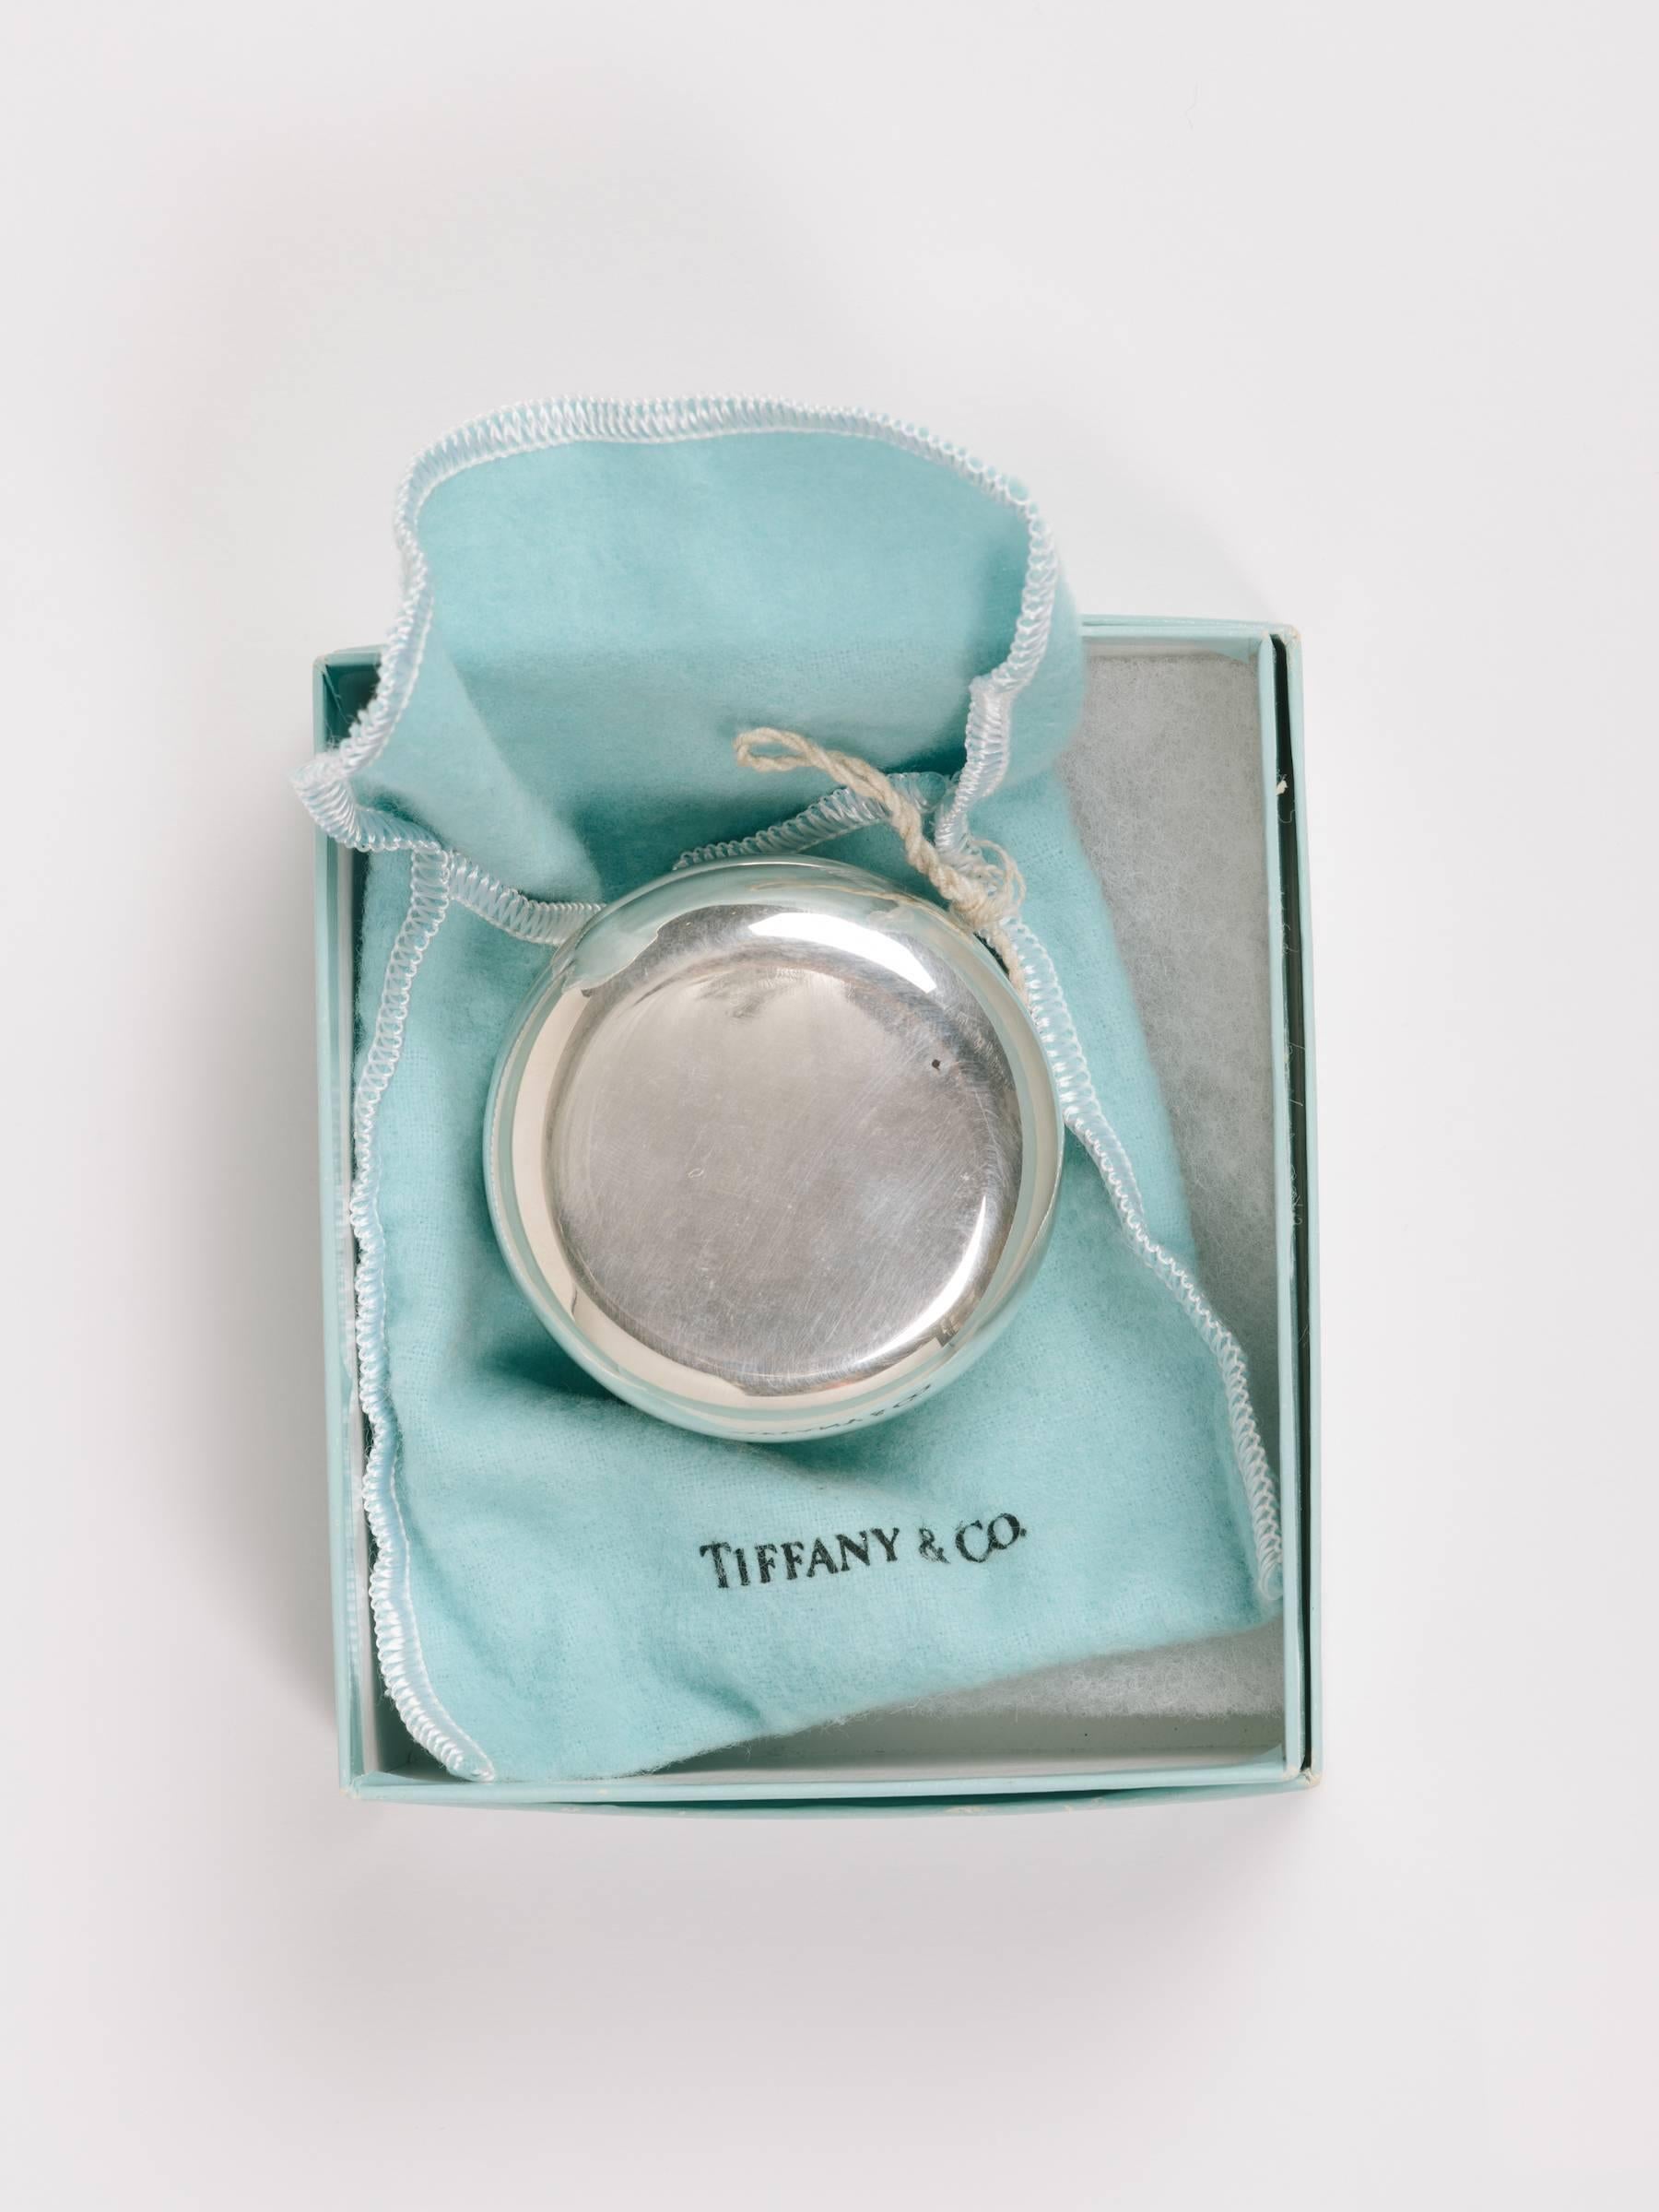 Tiffany sterling yo-yo. In box and bag.